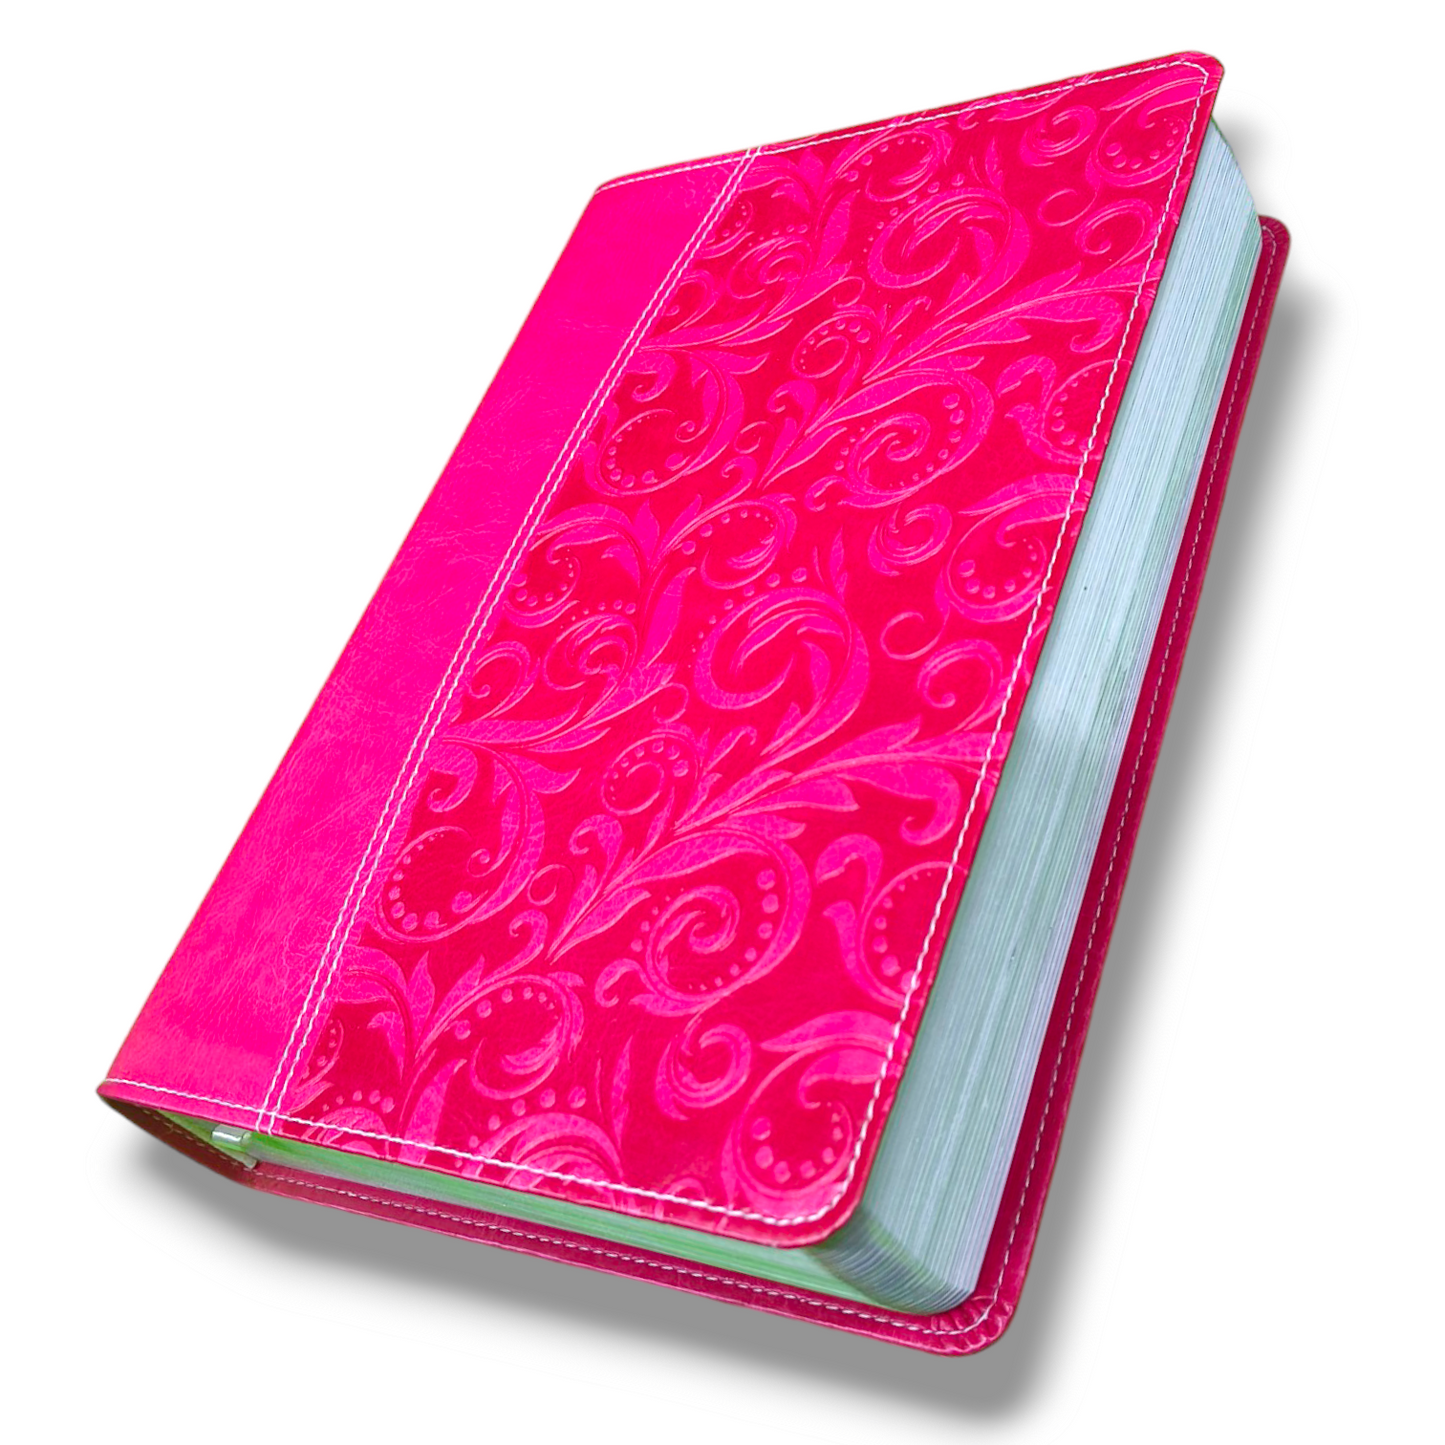 NIV Essentials Study Bible | New Edition | NIV Version | Attractive Pink Bound